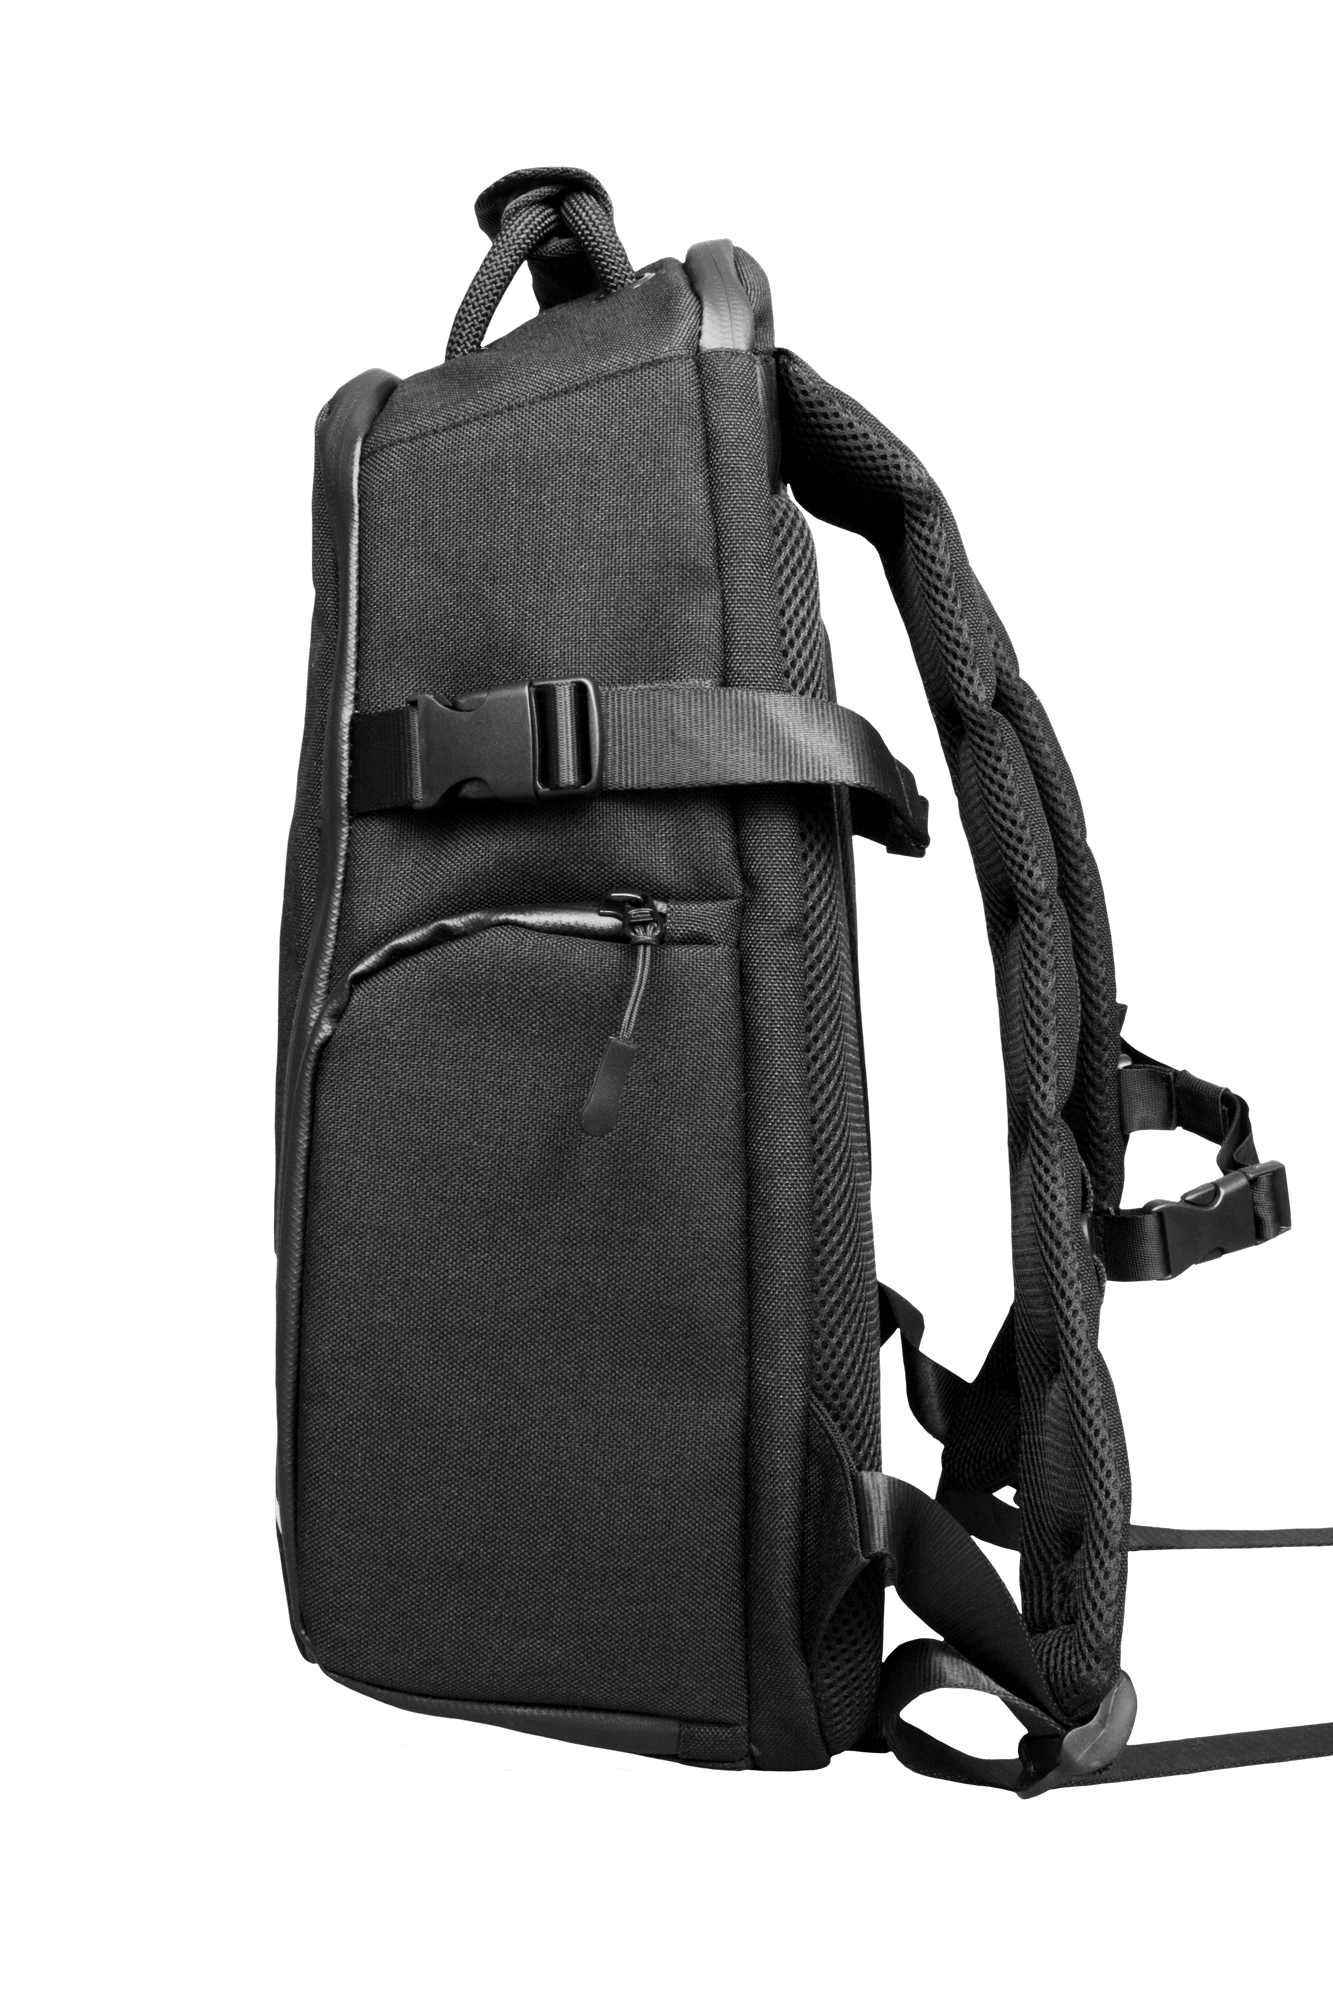 Focal Camera Backpack